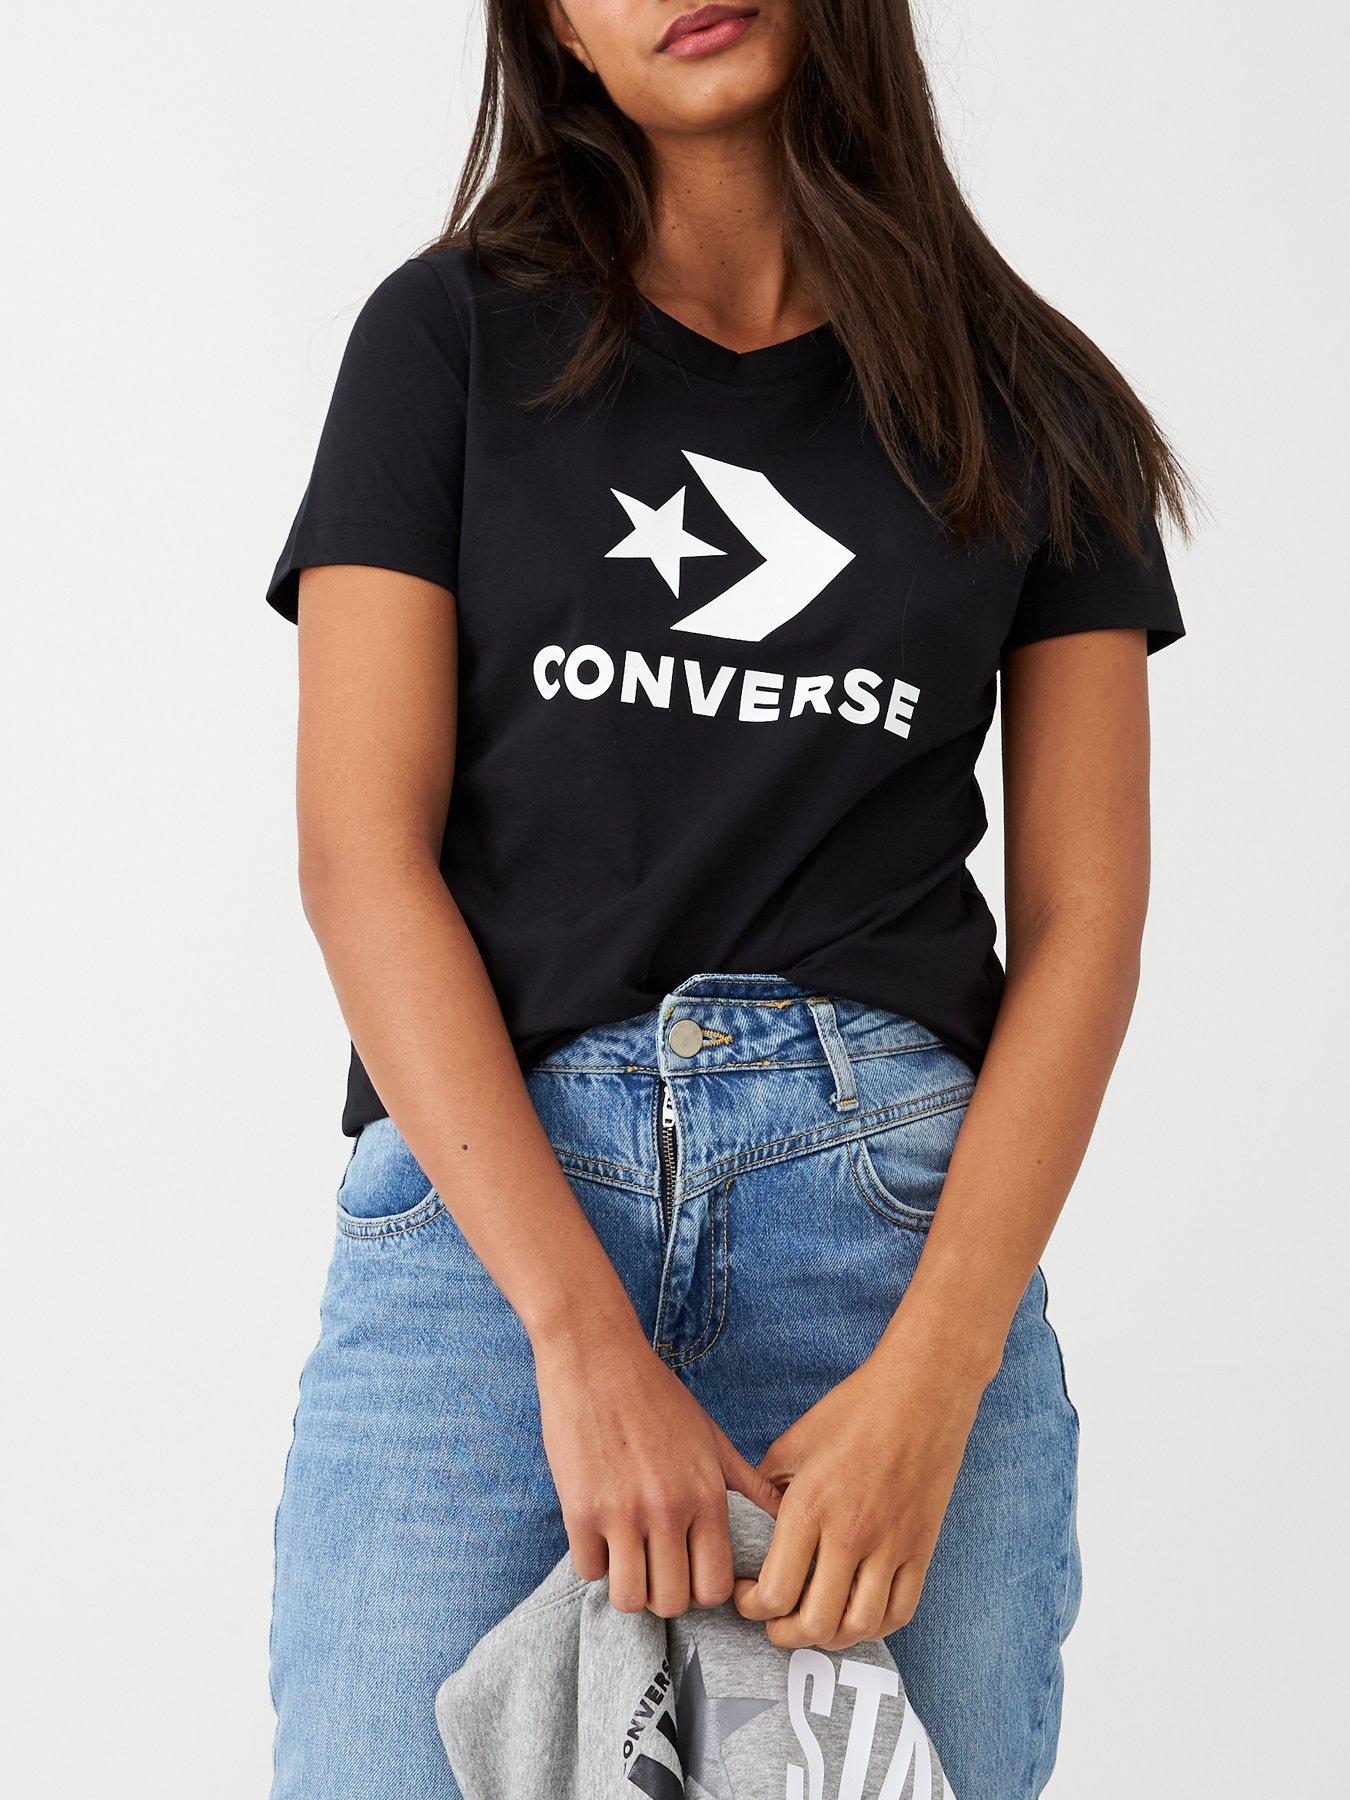 converse t shirt ladies